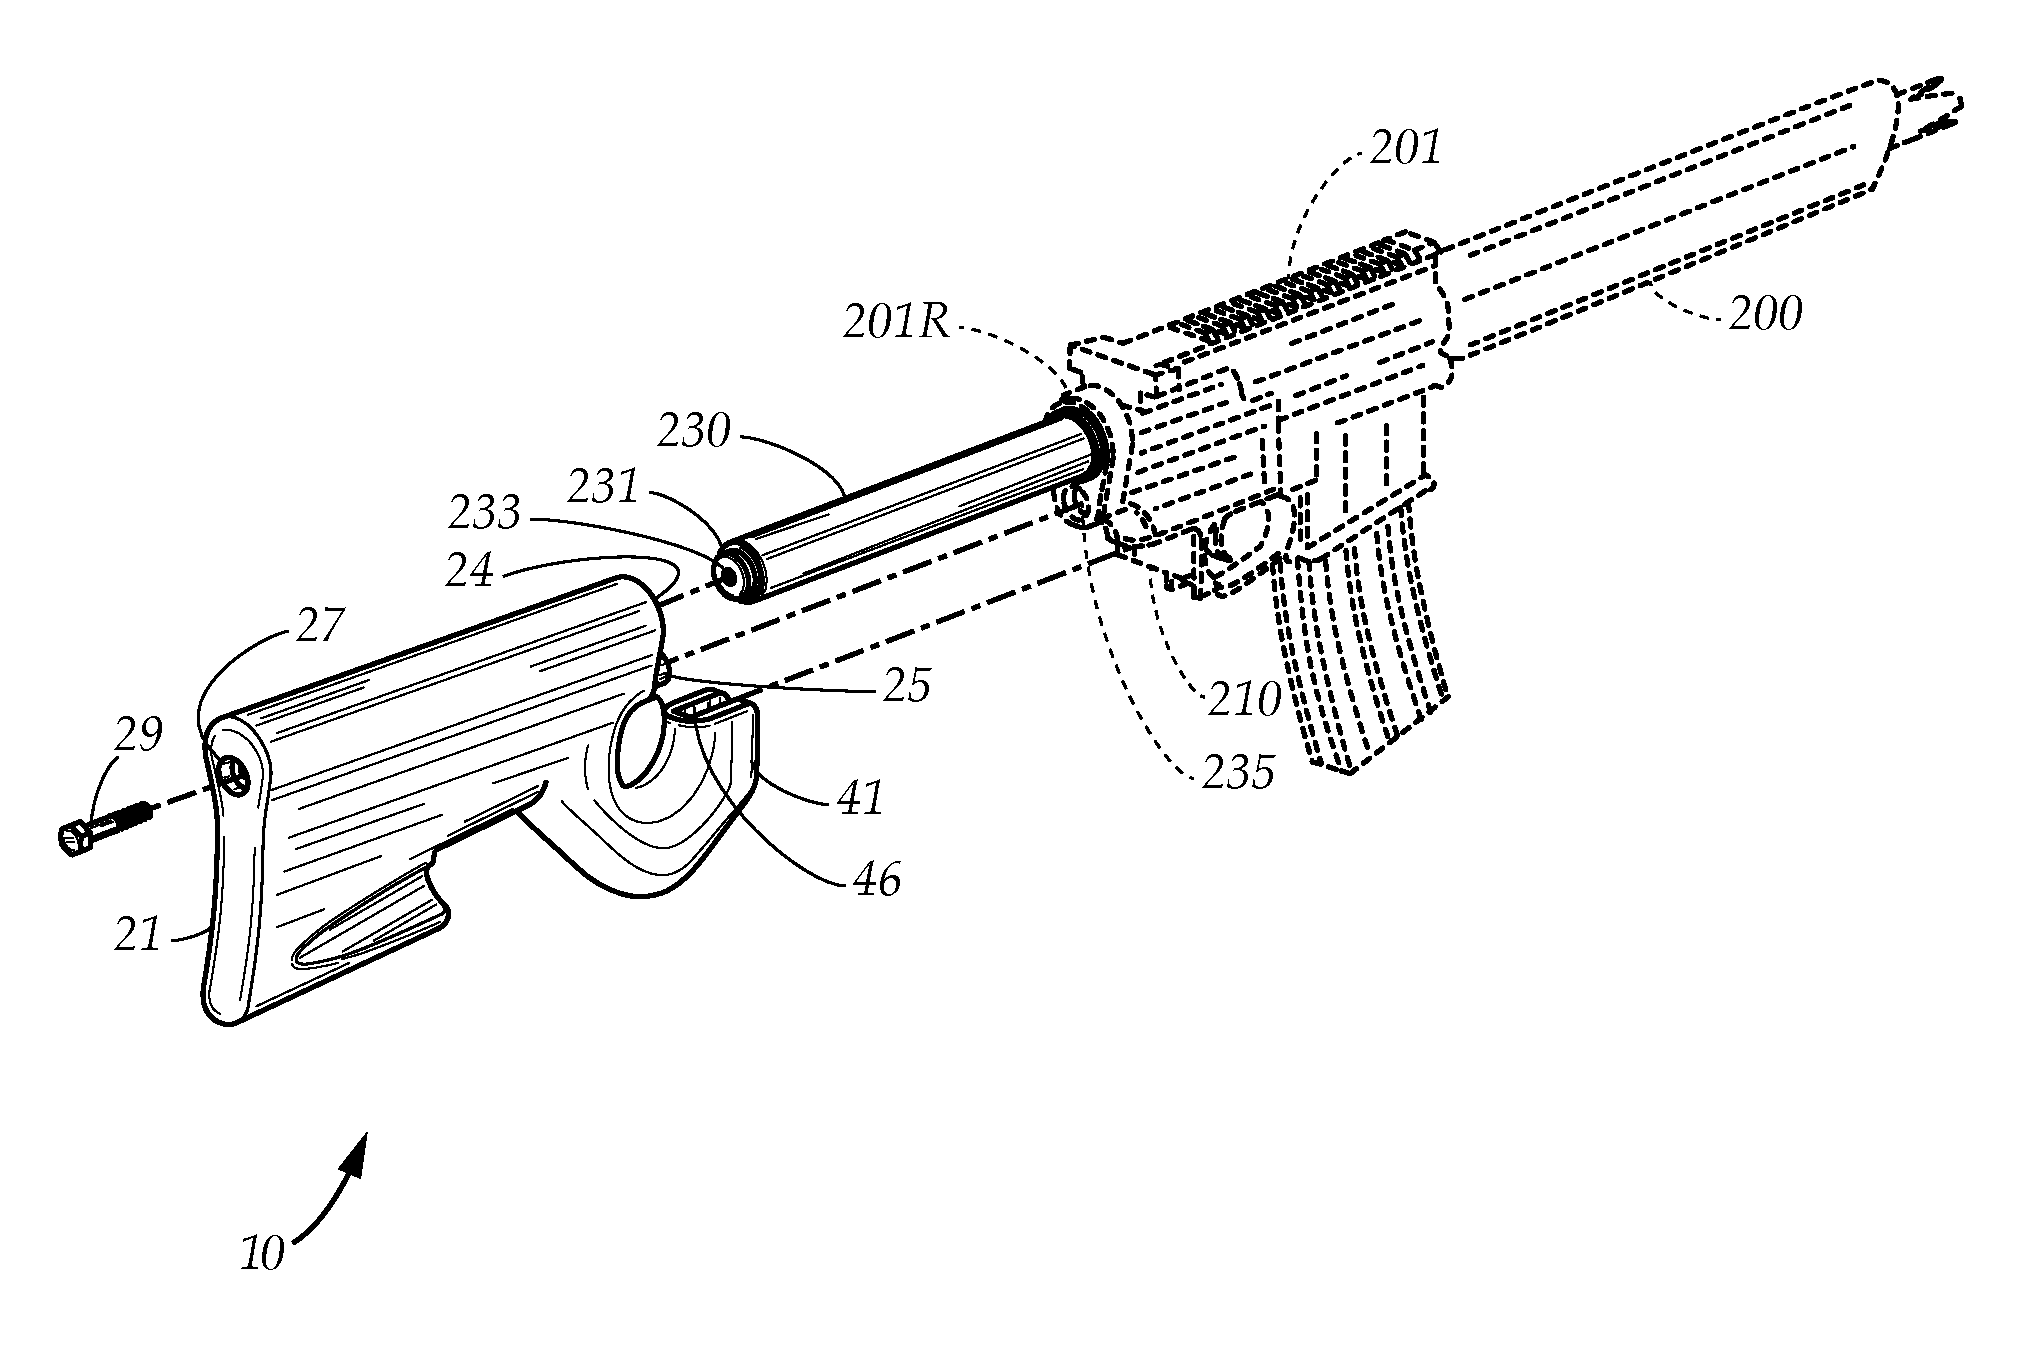 Integrated gun stock